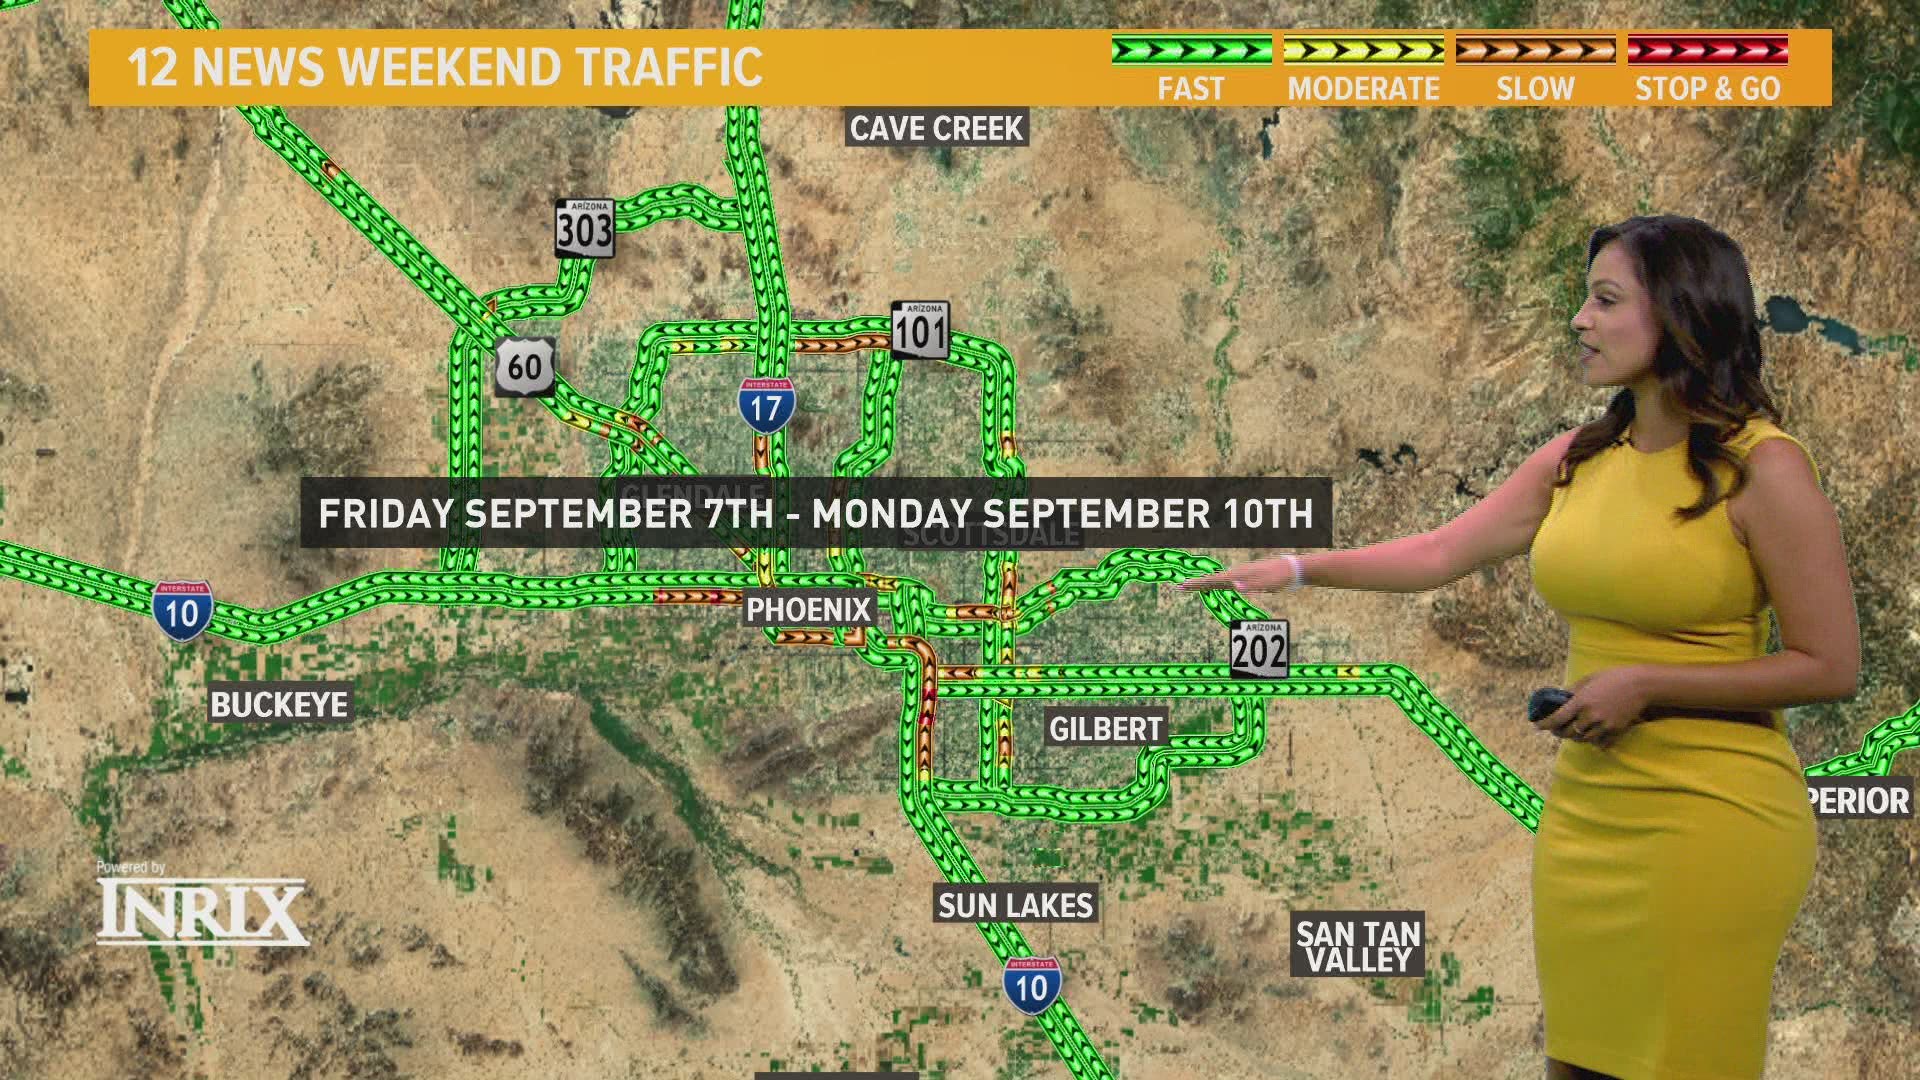 Here's your weekend traffic outlook for September 7 - September 10